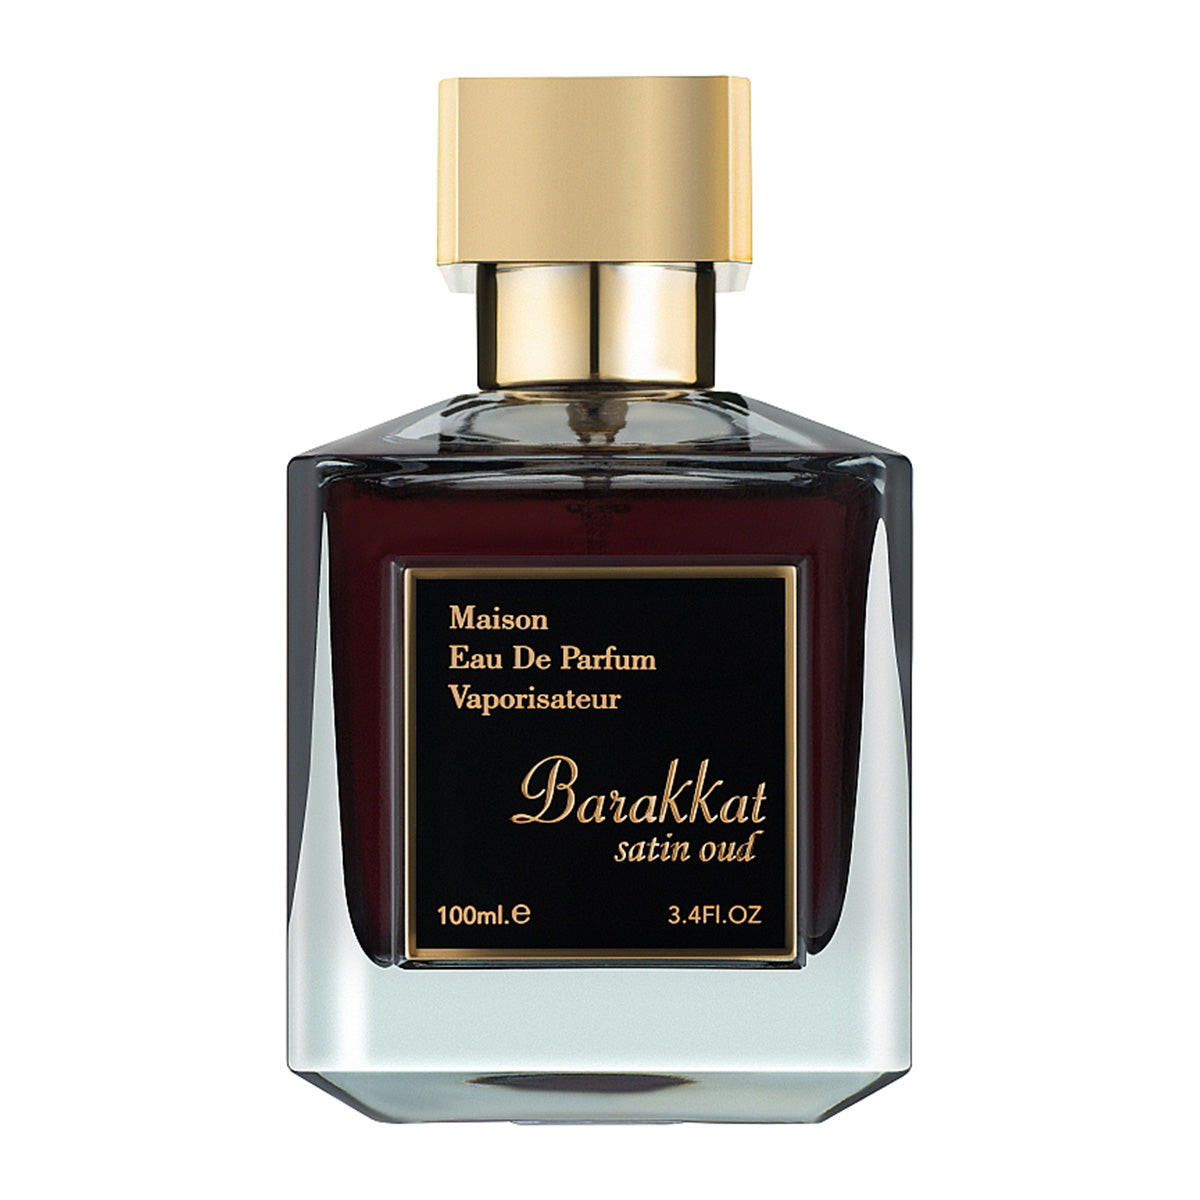 Barakkat Satin Oud Maison Eau de Parfum 100ml Fragrance World-Perfume Heaven